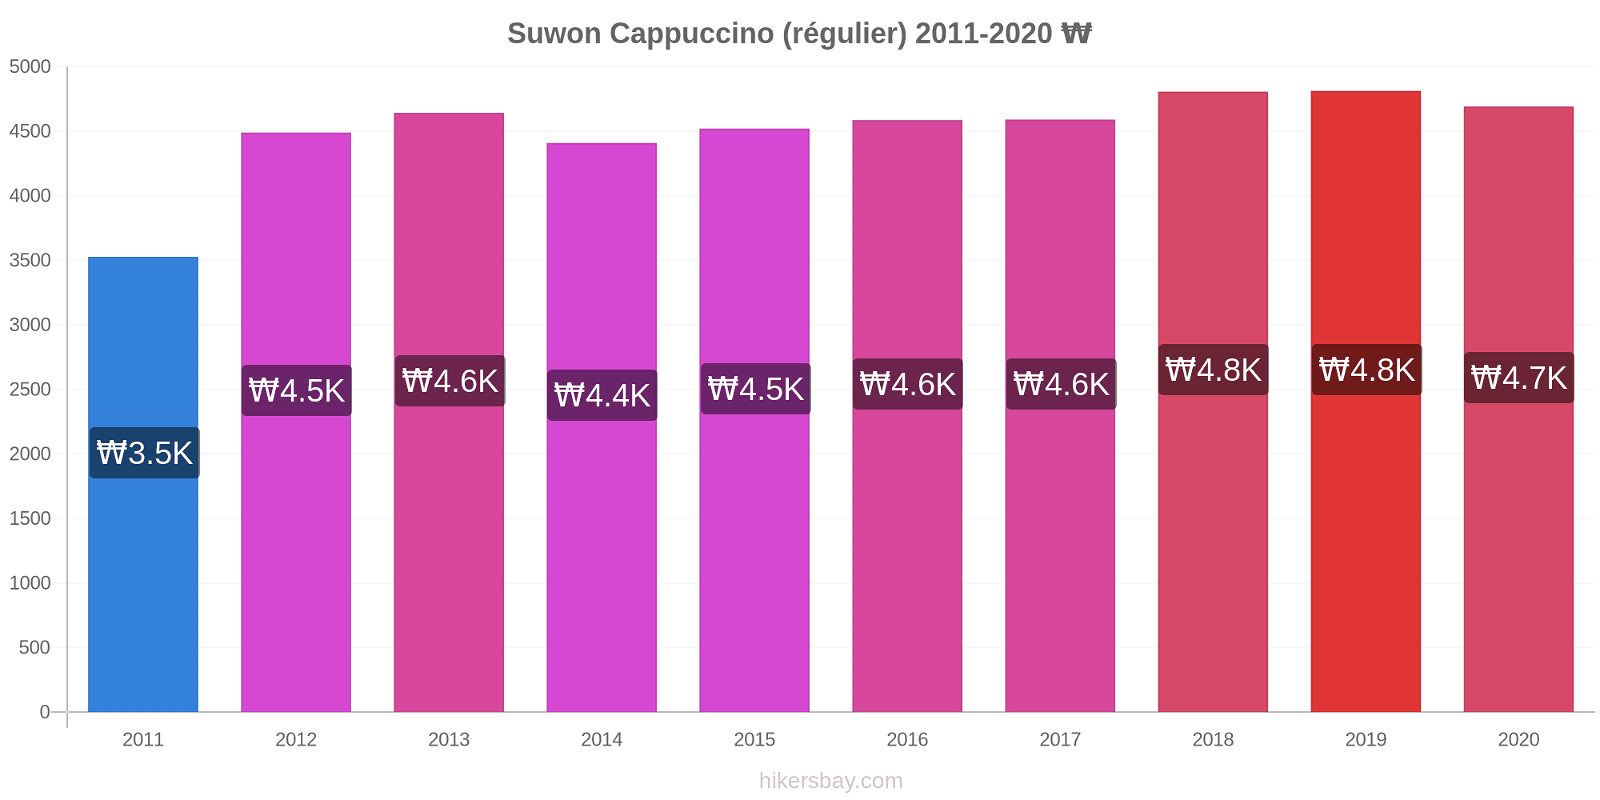 Suwon changements de prix Cappuccino (régulier) hikersbay.com